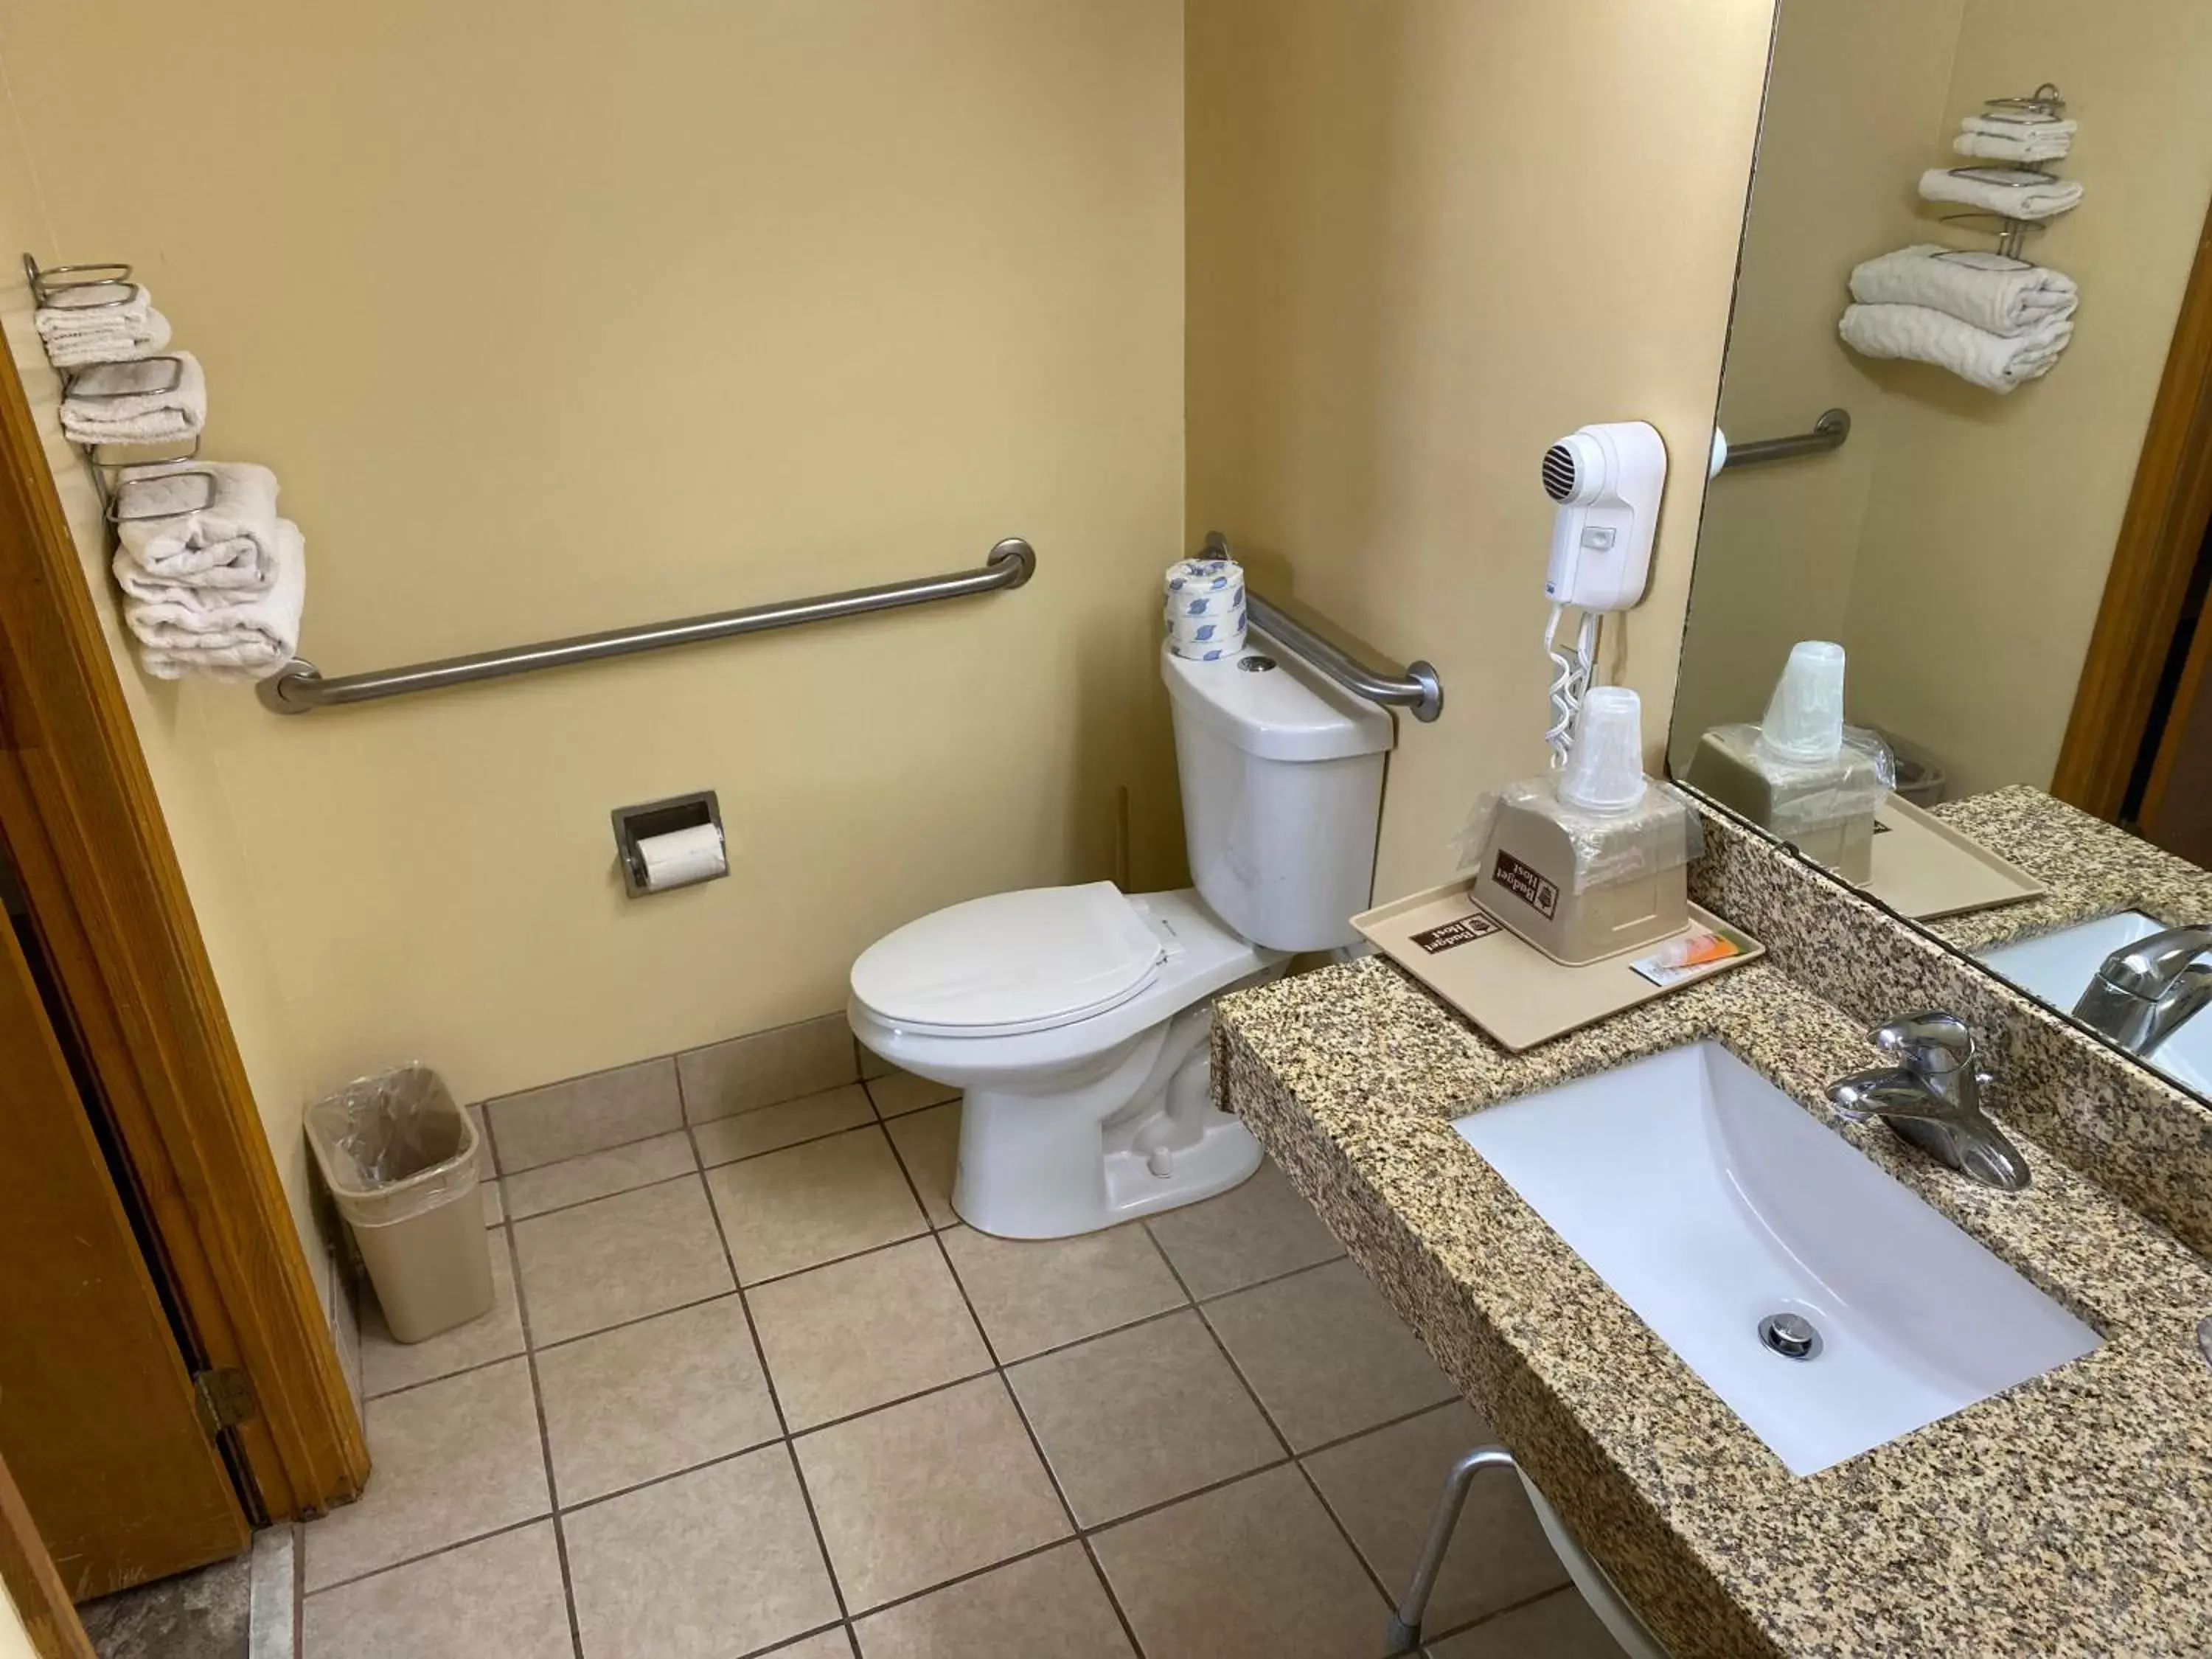 Bathroom in Budget Host Inn - Baxley